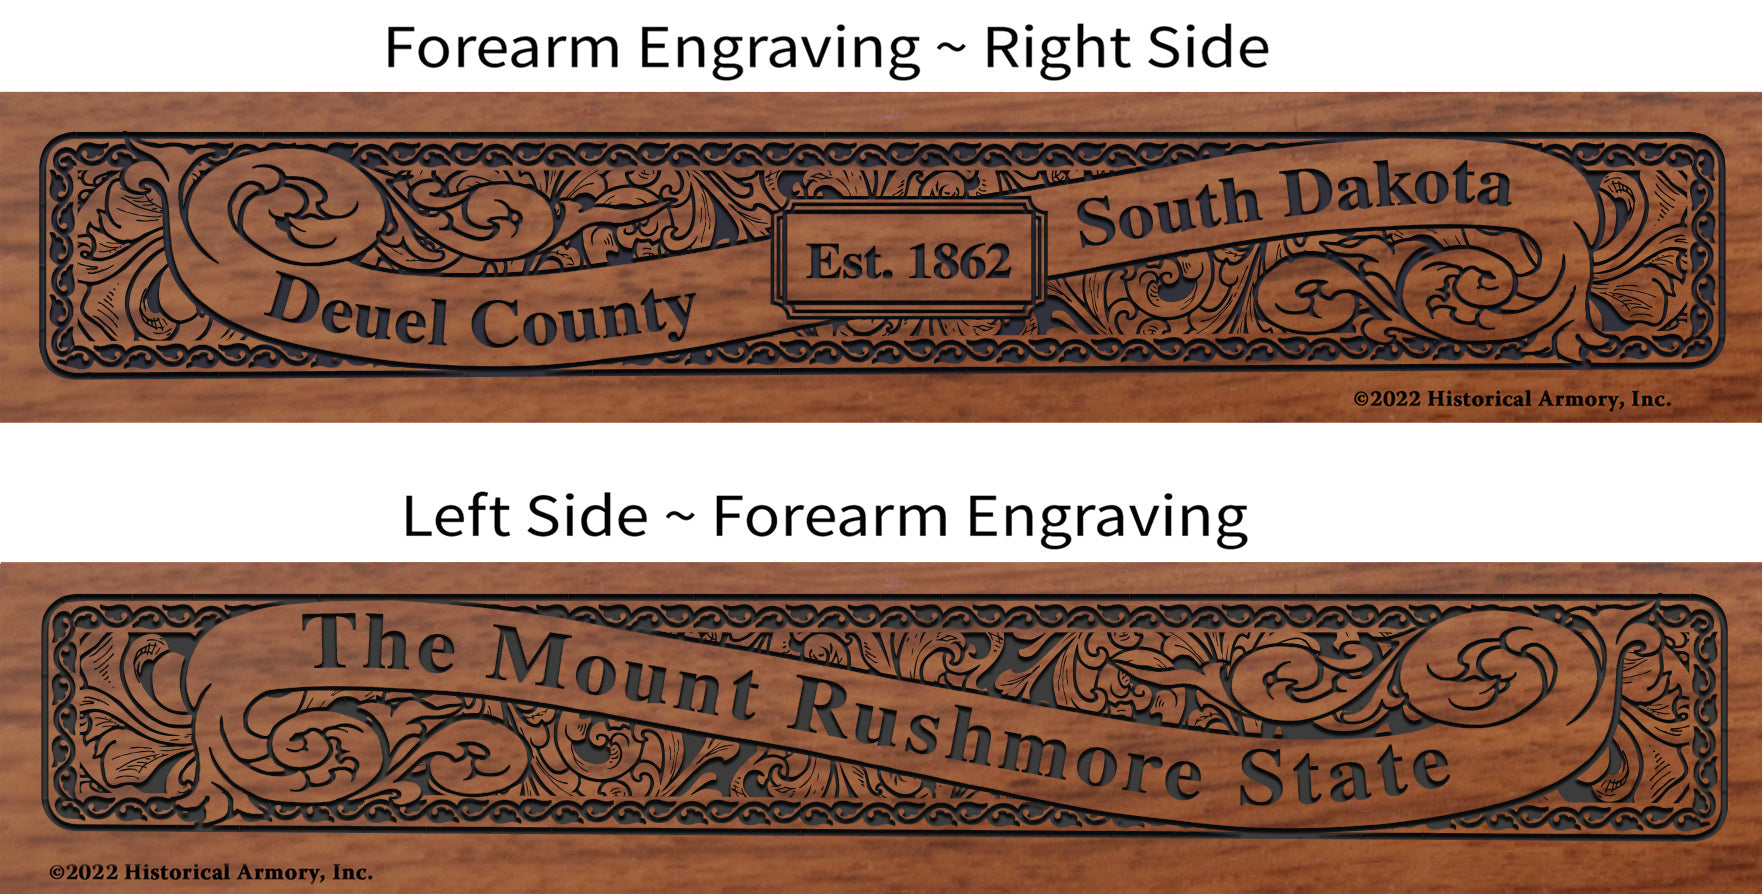 Deuel County South Dakota Engraved Rifle Forearm